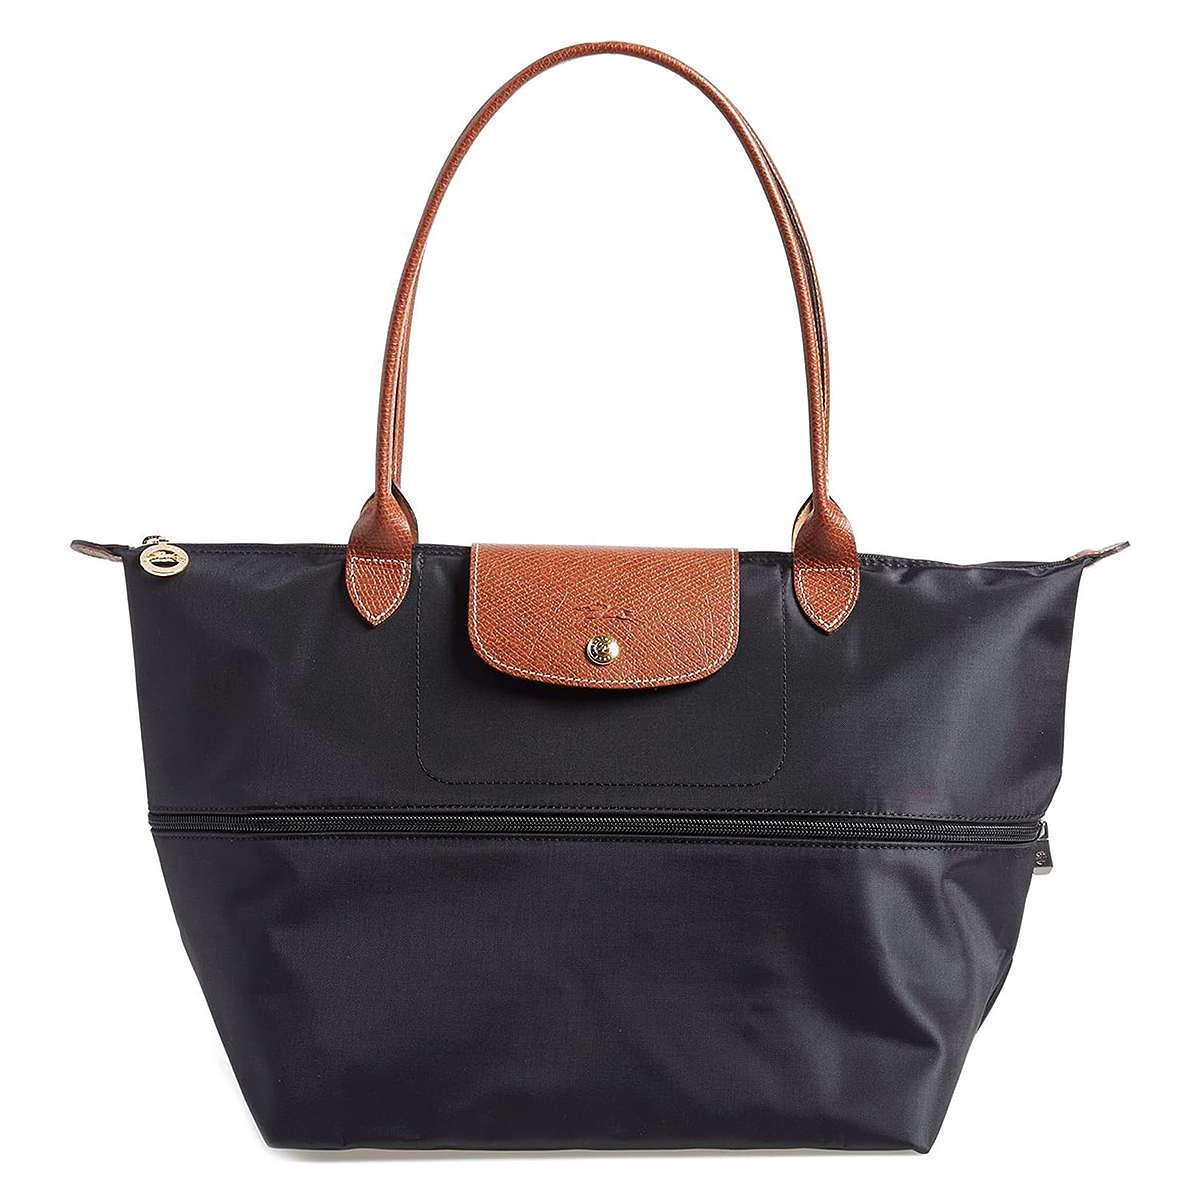 Louis Vuitton Handbags At Nordstrom Sale